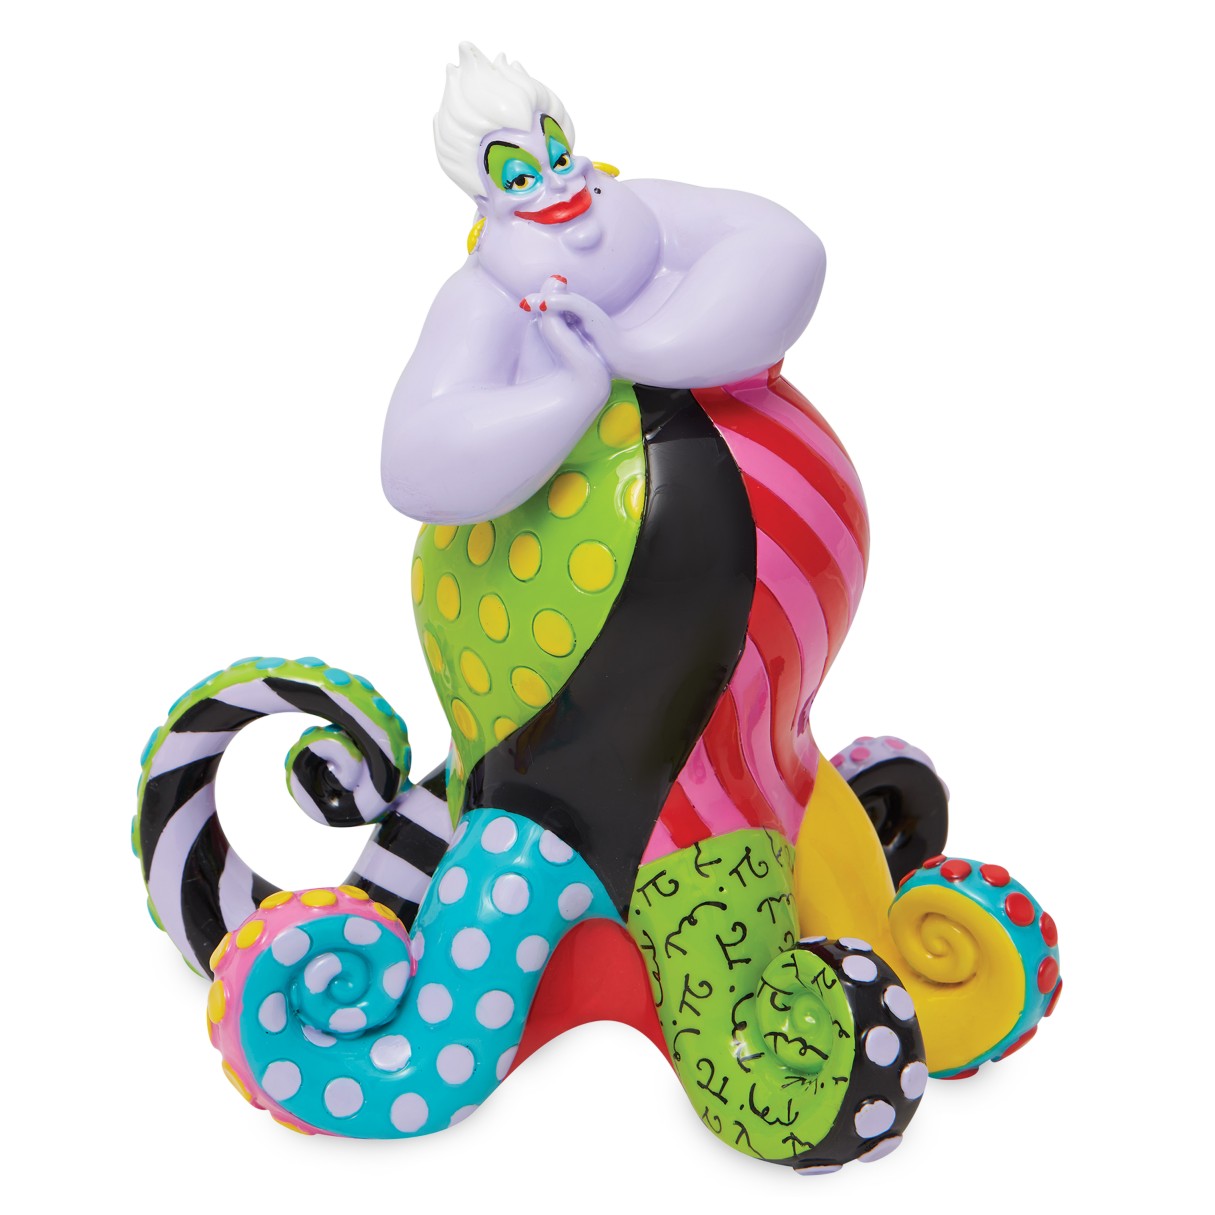 Ursula Figure by Britto – The Little Mermaid